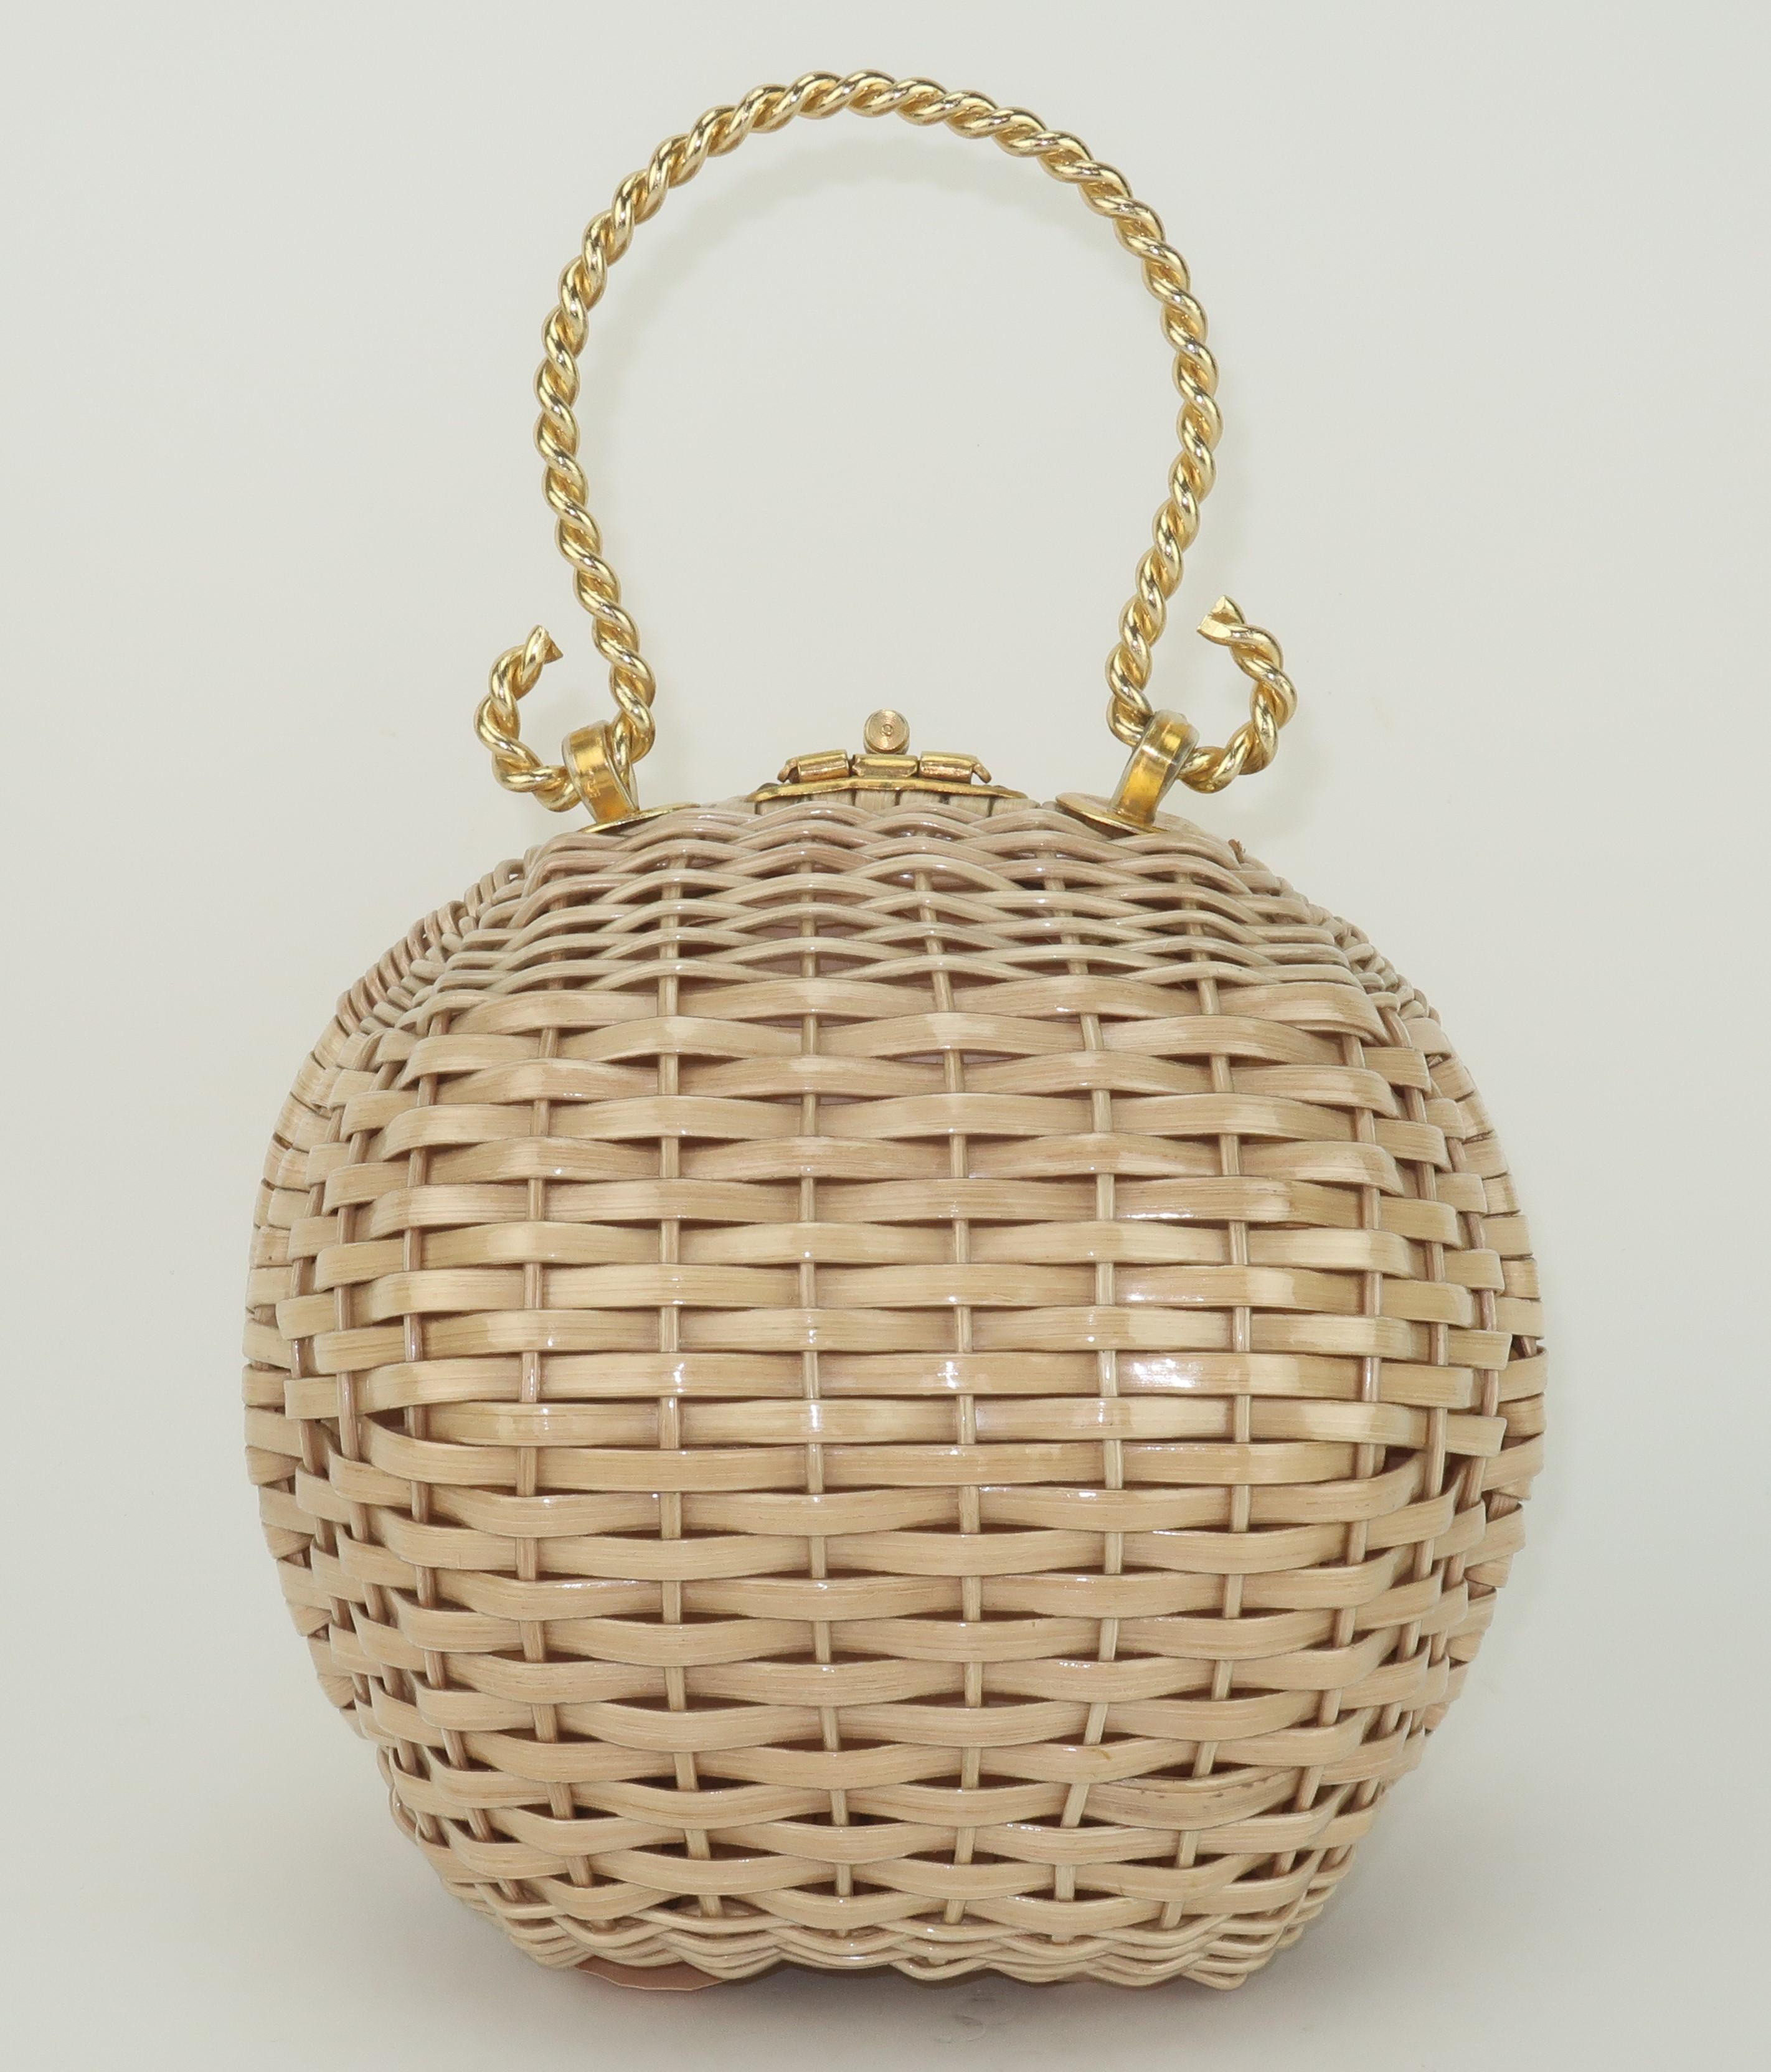 Women's Wicker Ball Shaped Handbag With Gold Handle, 1960's